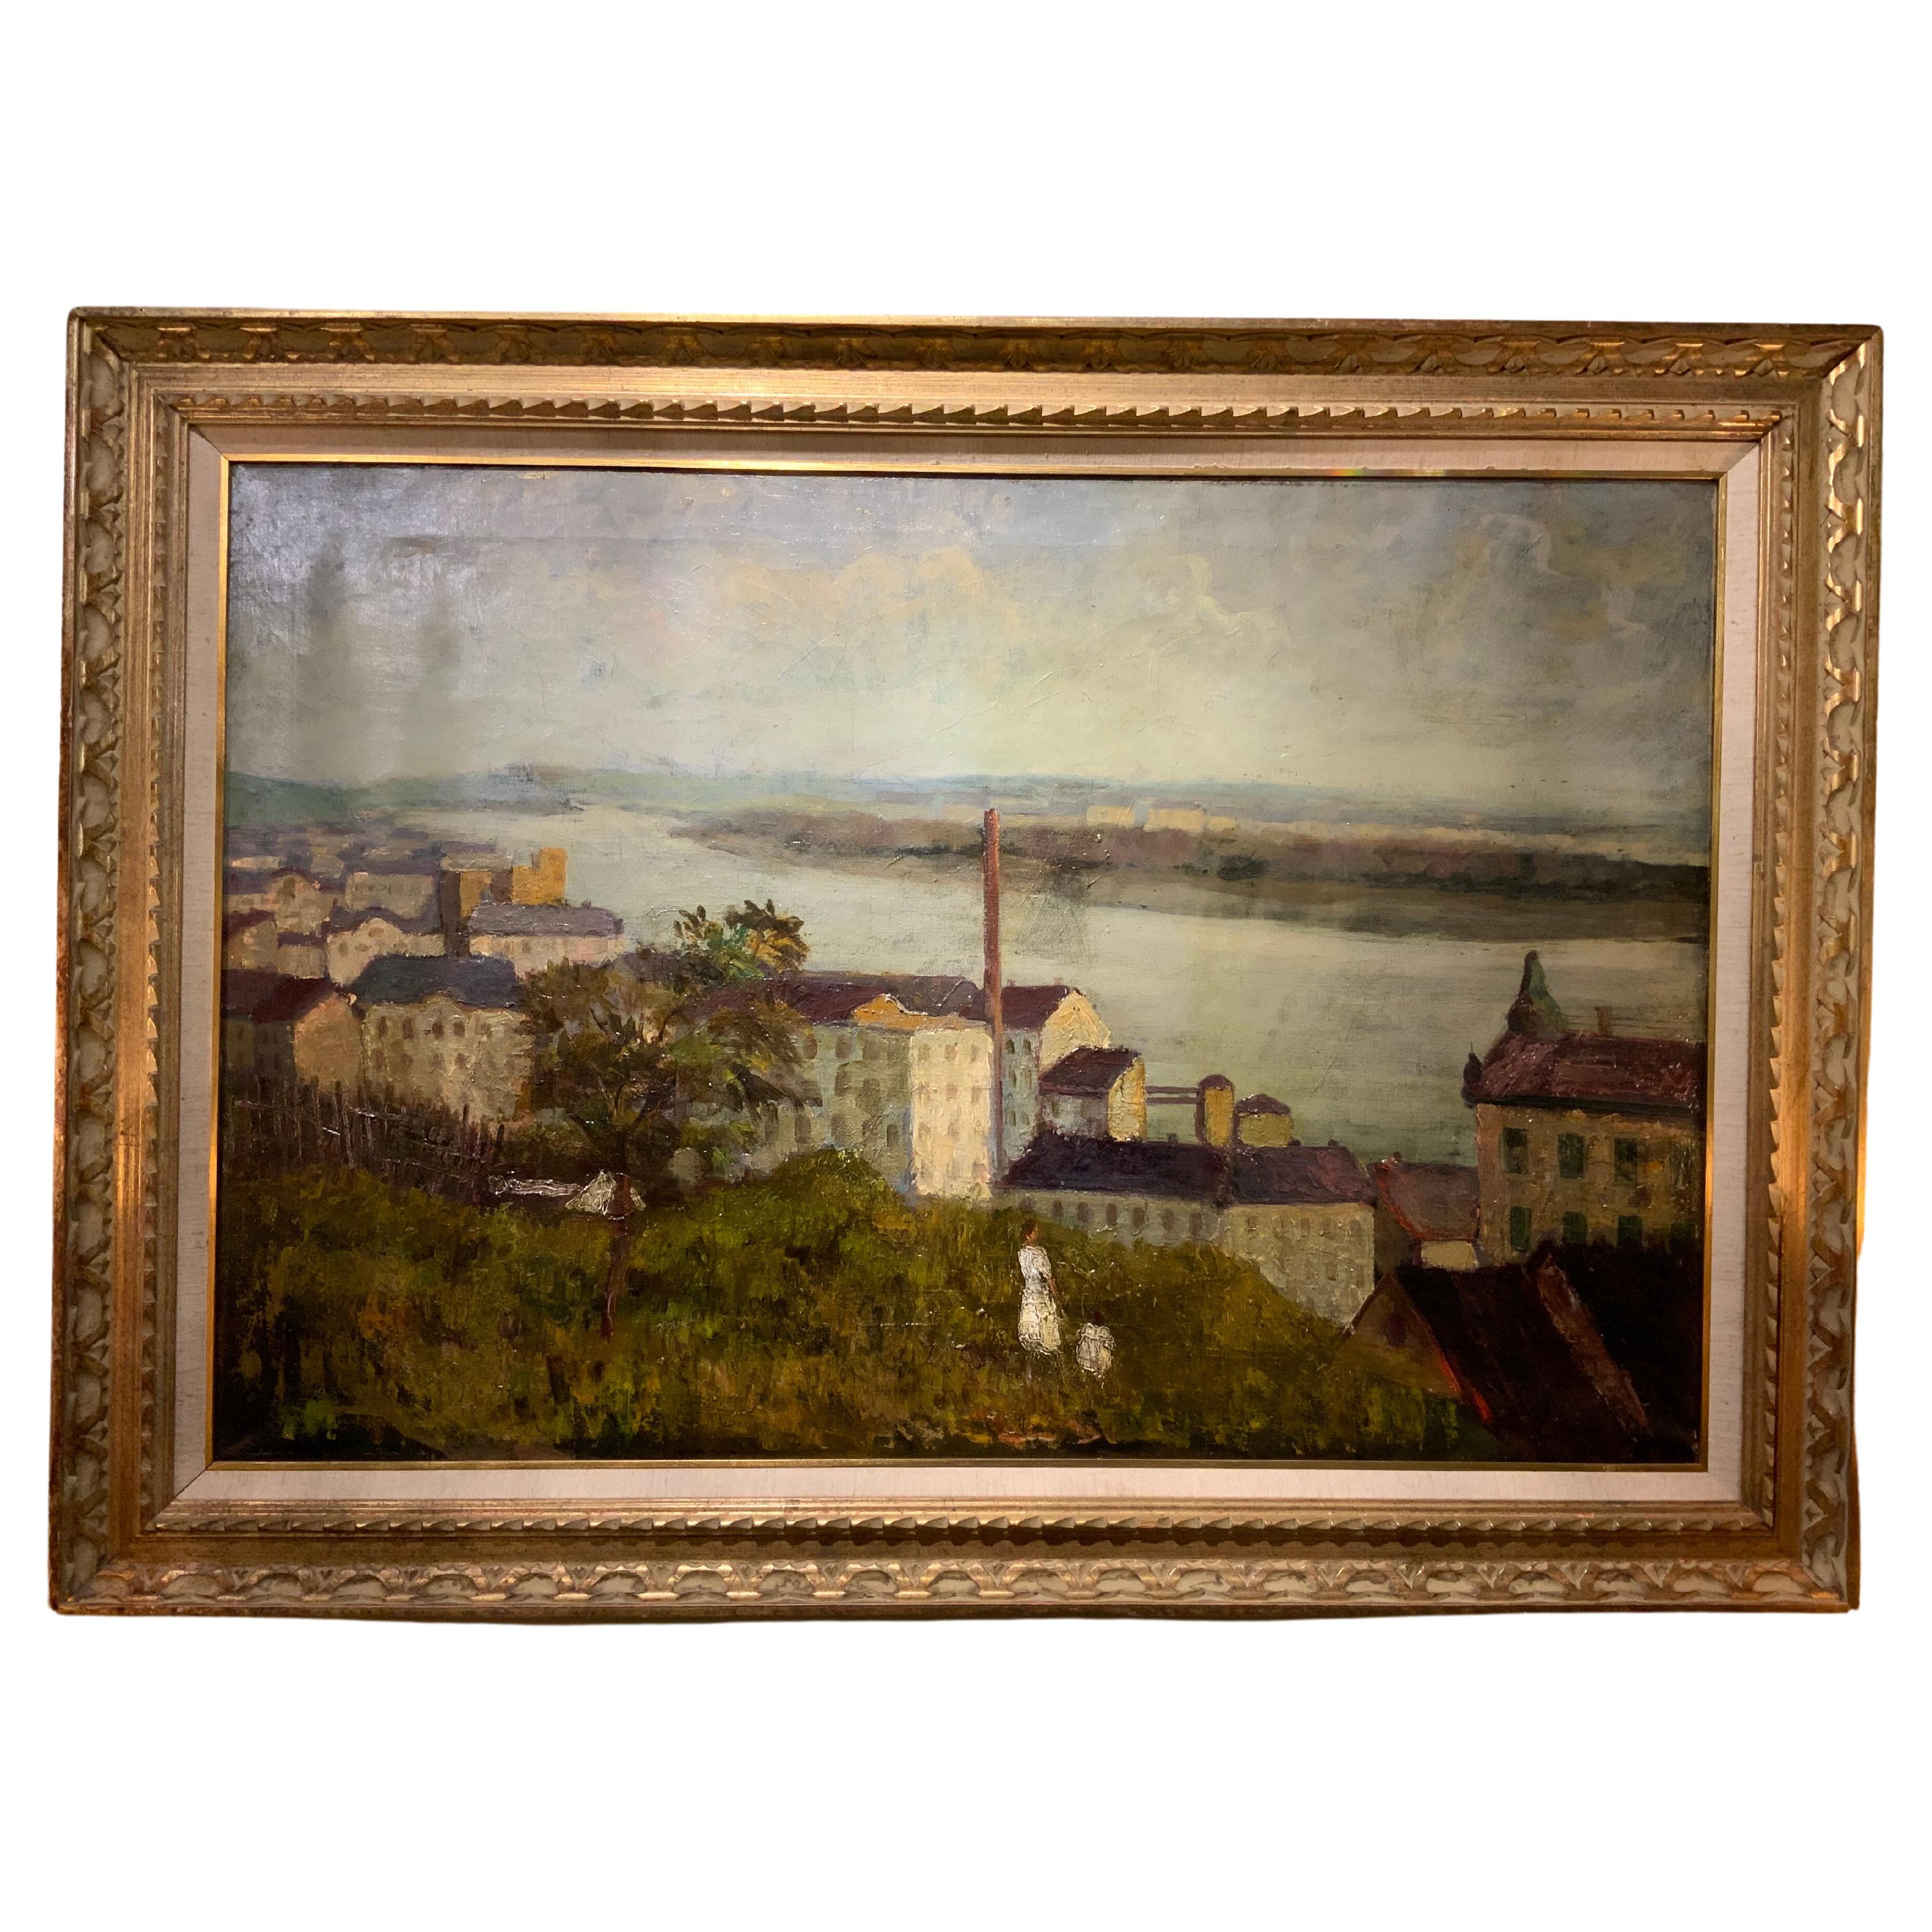  Oil on canvas  “riverside city” 19th century”